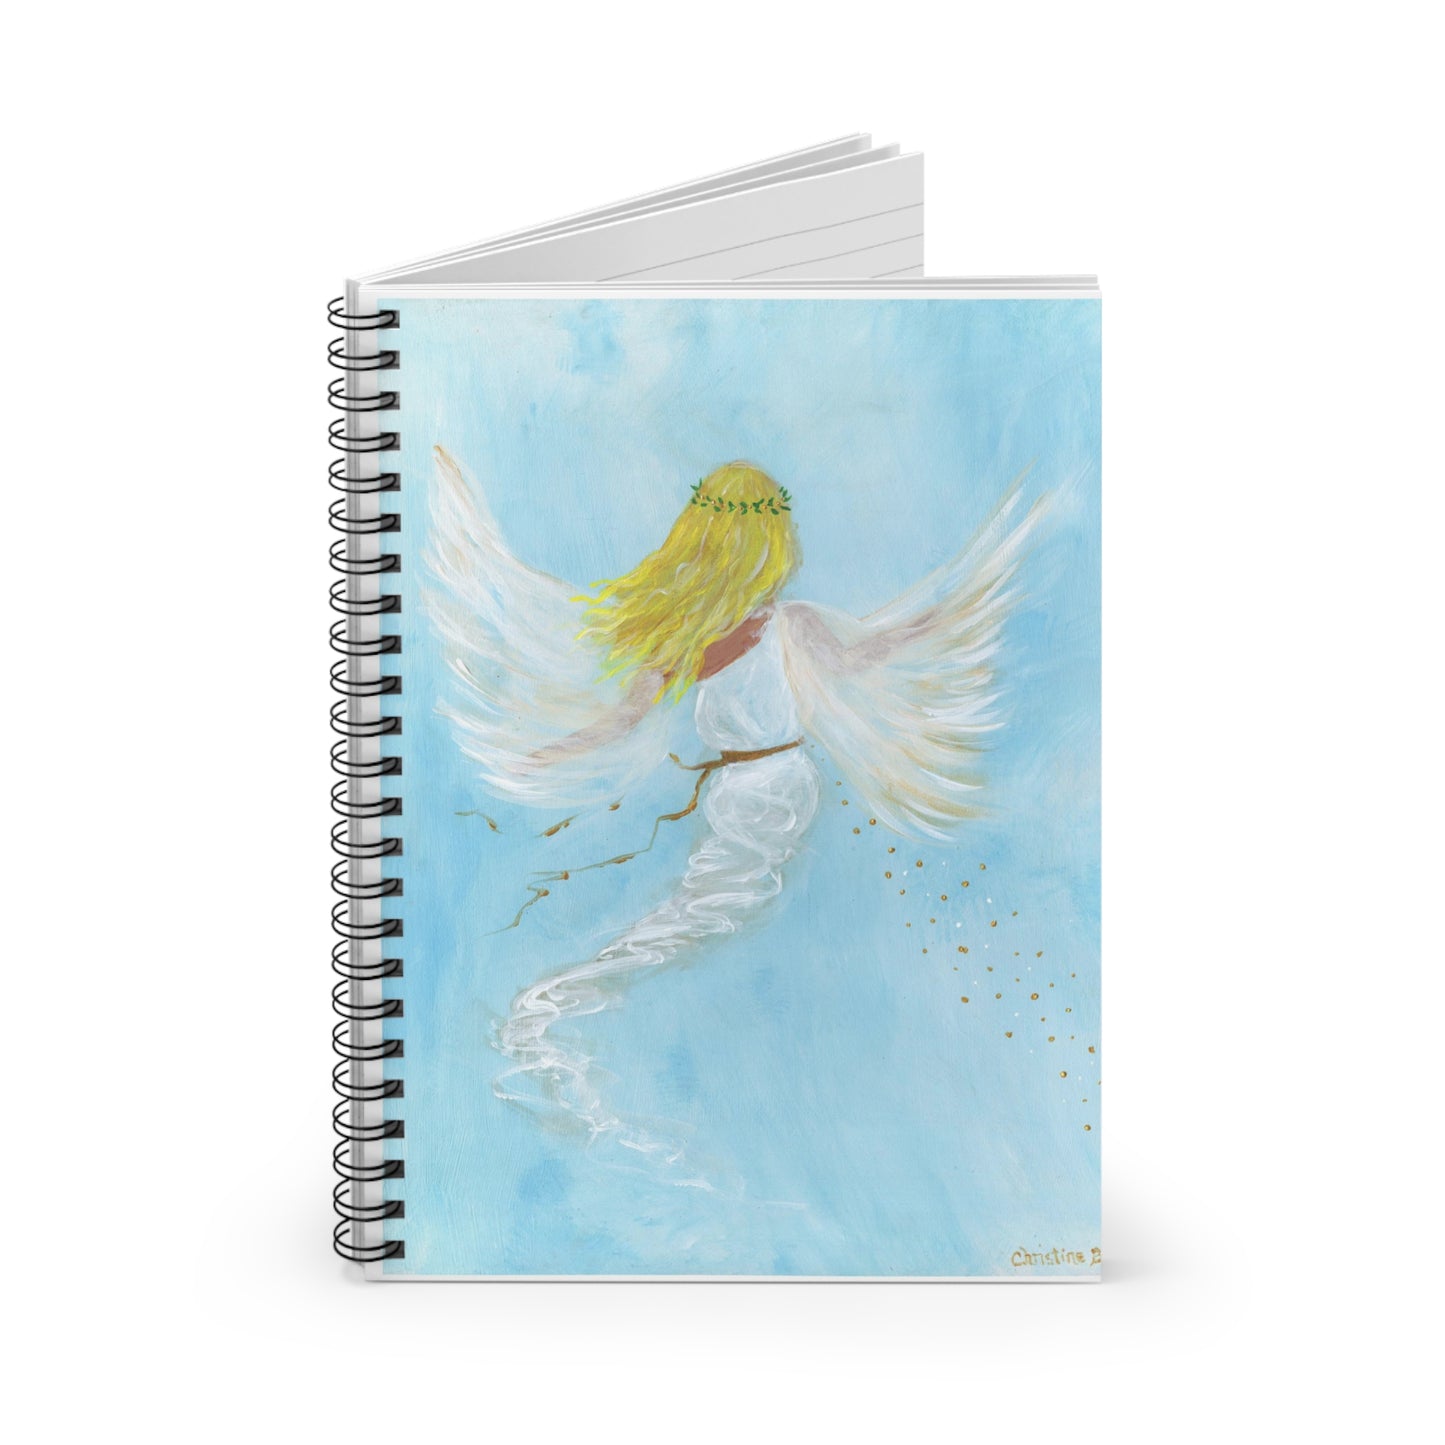 Angel Goddess | Spiral Notebook | Ruled Line